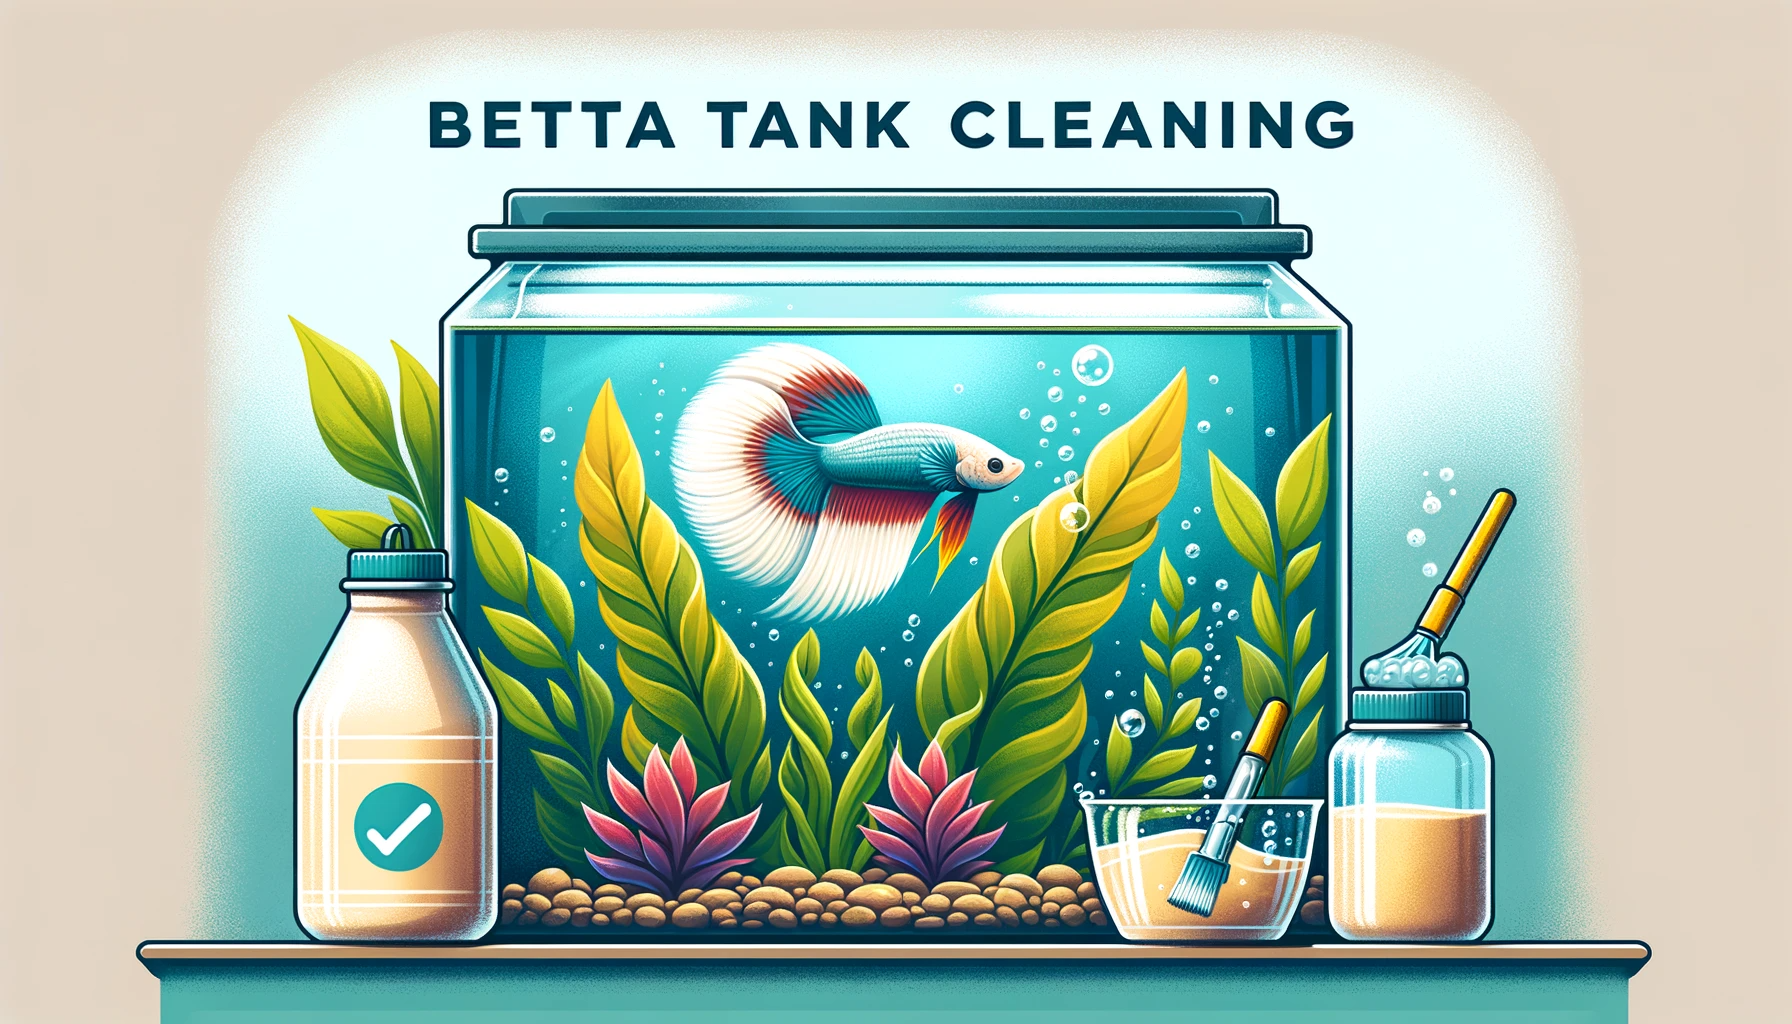 Cleaning Betta fish tank